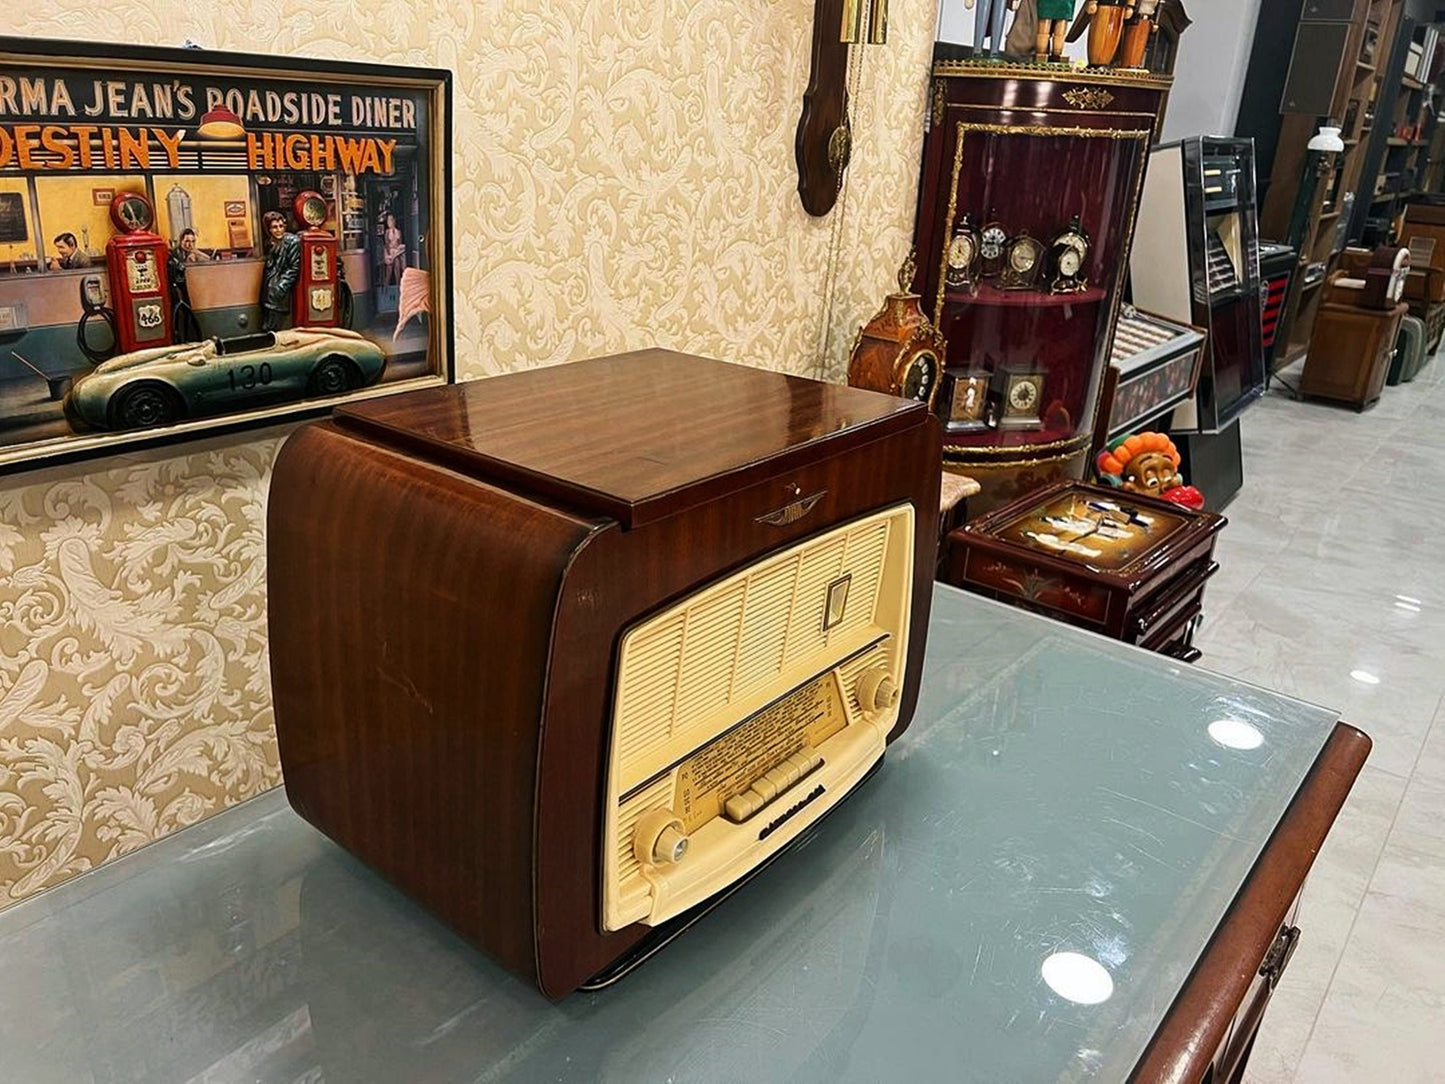 Sonneclair Vintage Radio - Original Classic, Lamp Radio - Dive into Nostalgia with Sonneclair Radio, Turntable